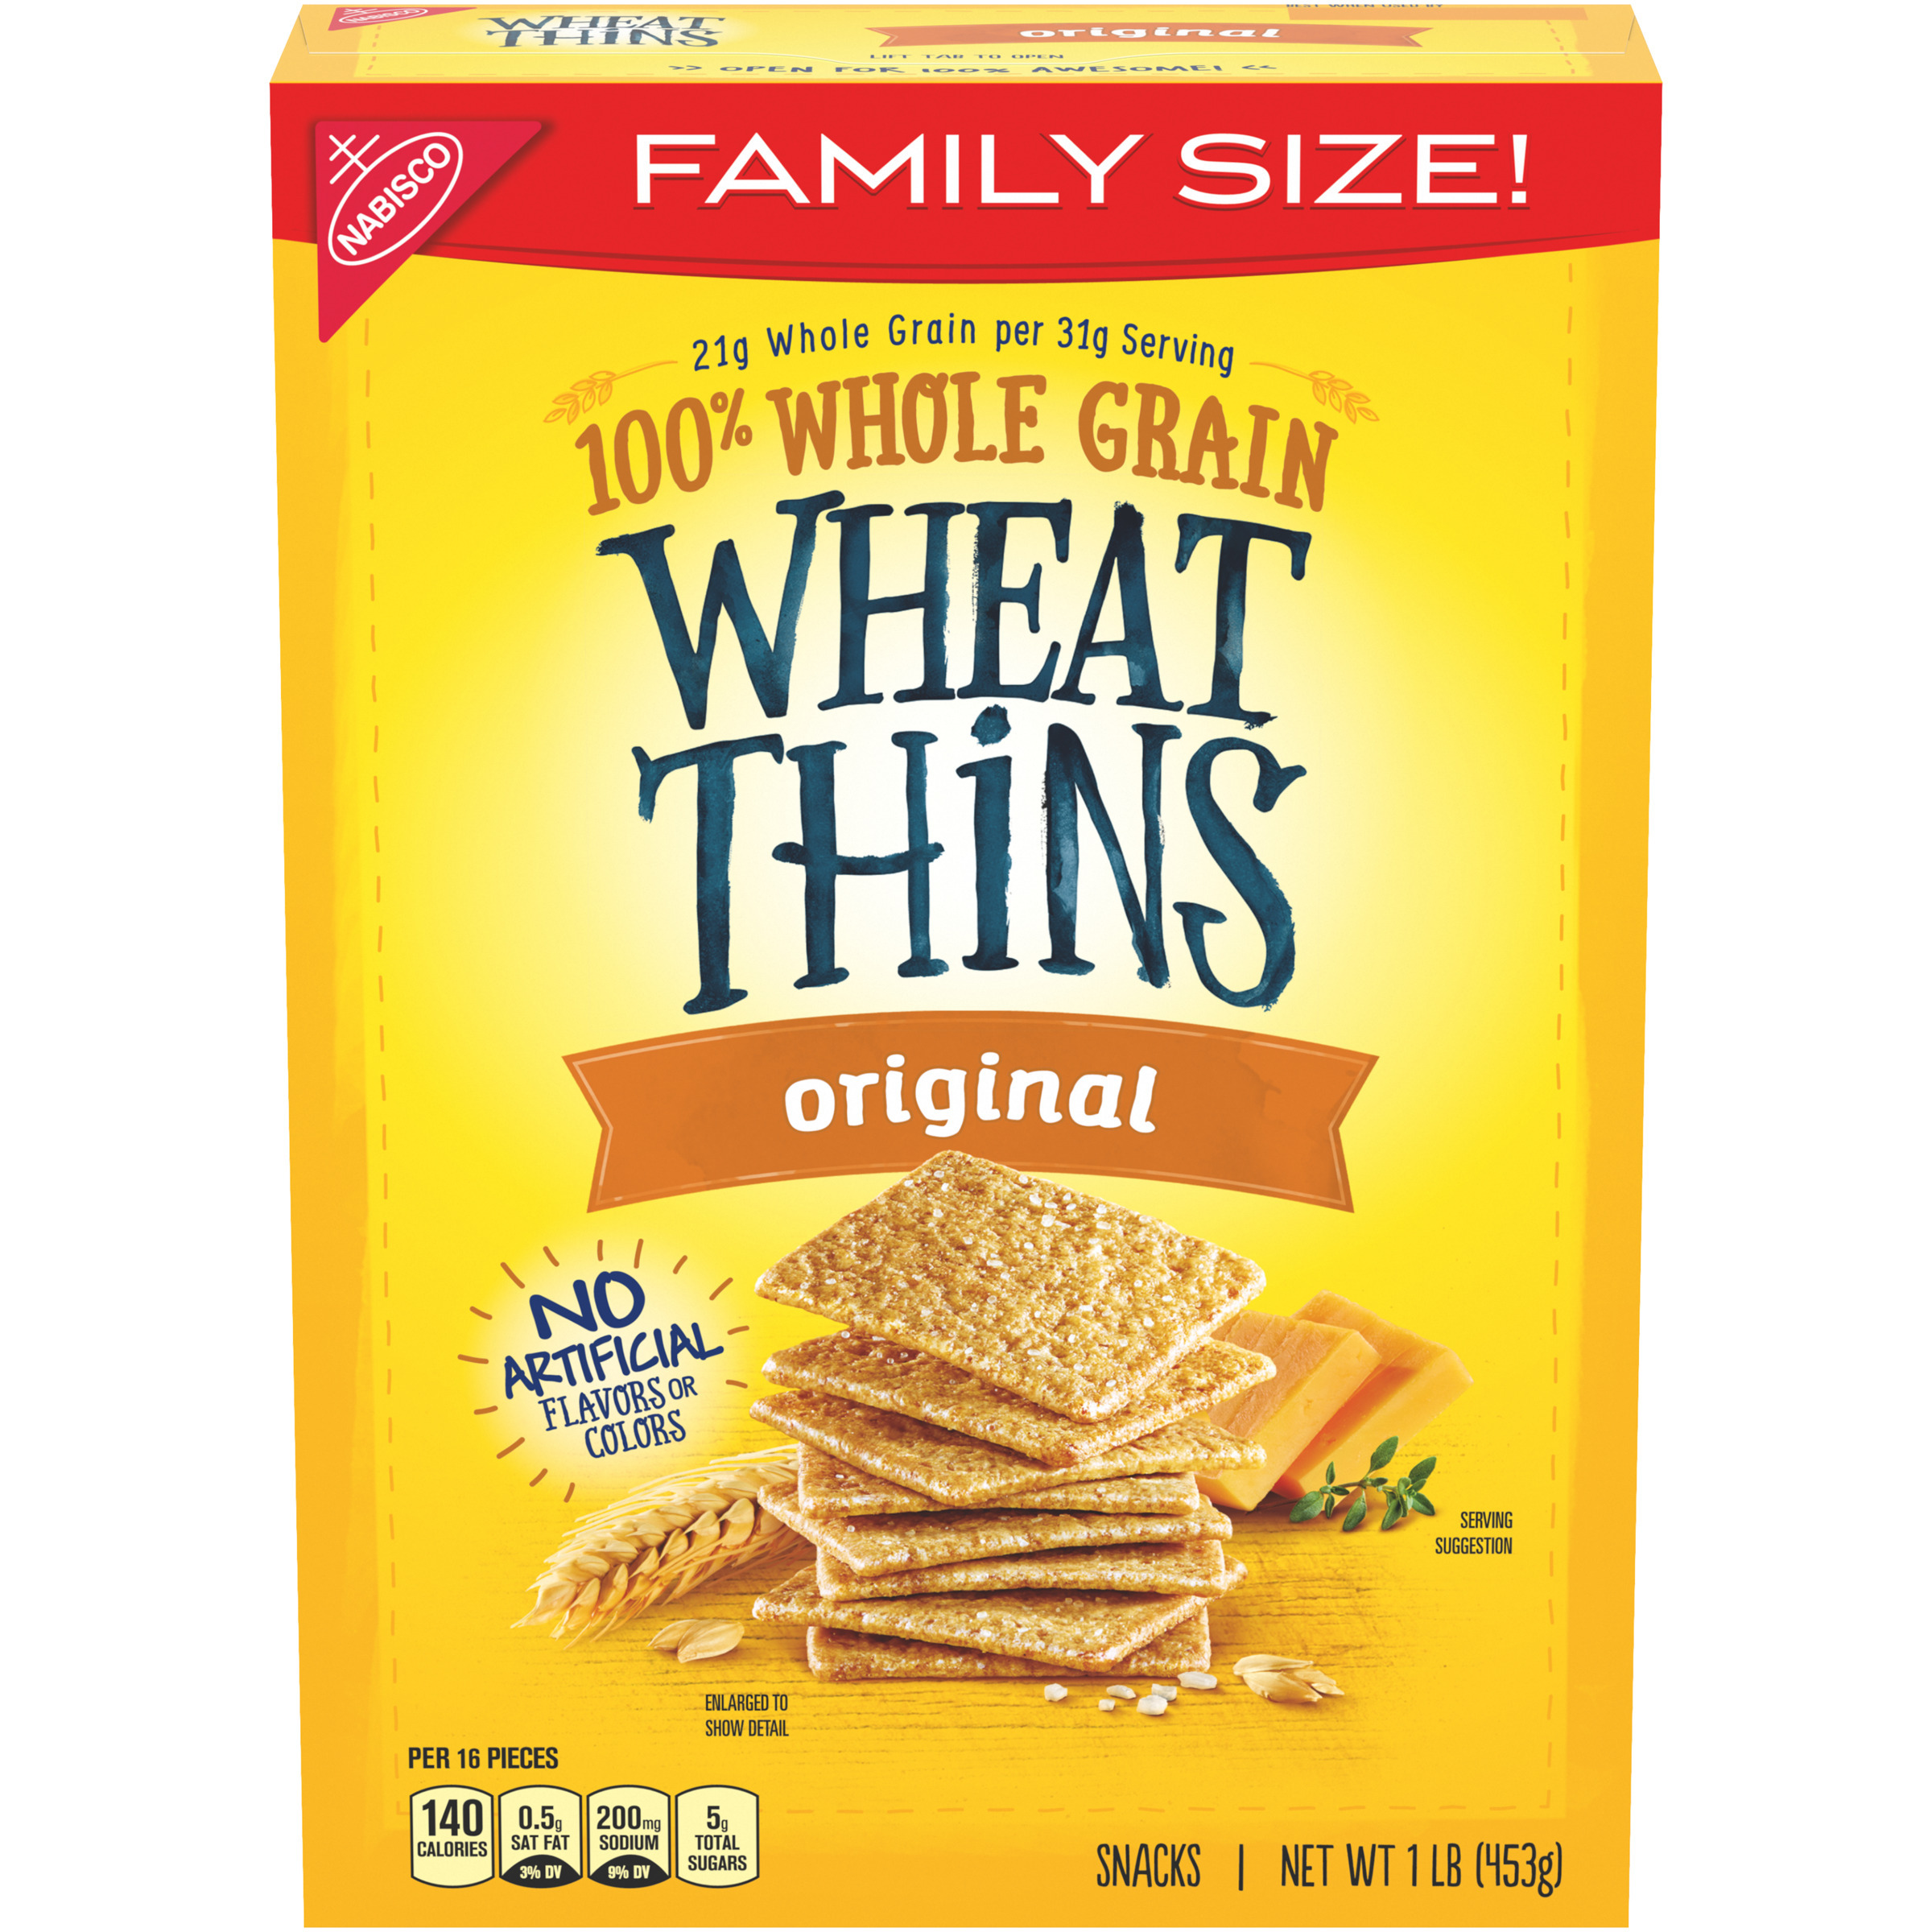 Wheat Thins Original Whole Grain Wheat Crackers, Family Size, 16 oz-0